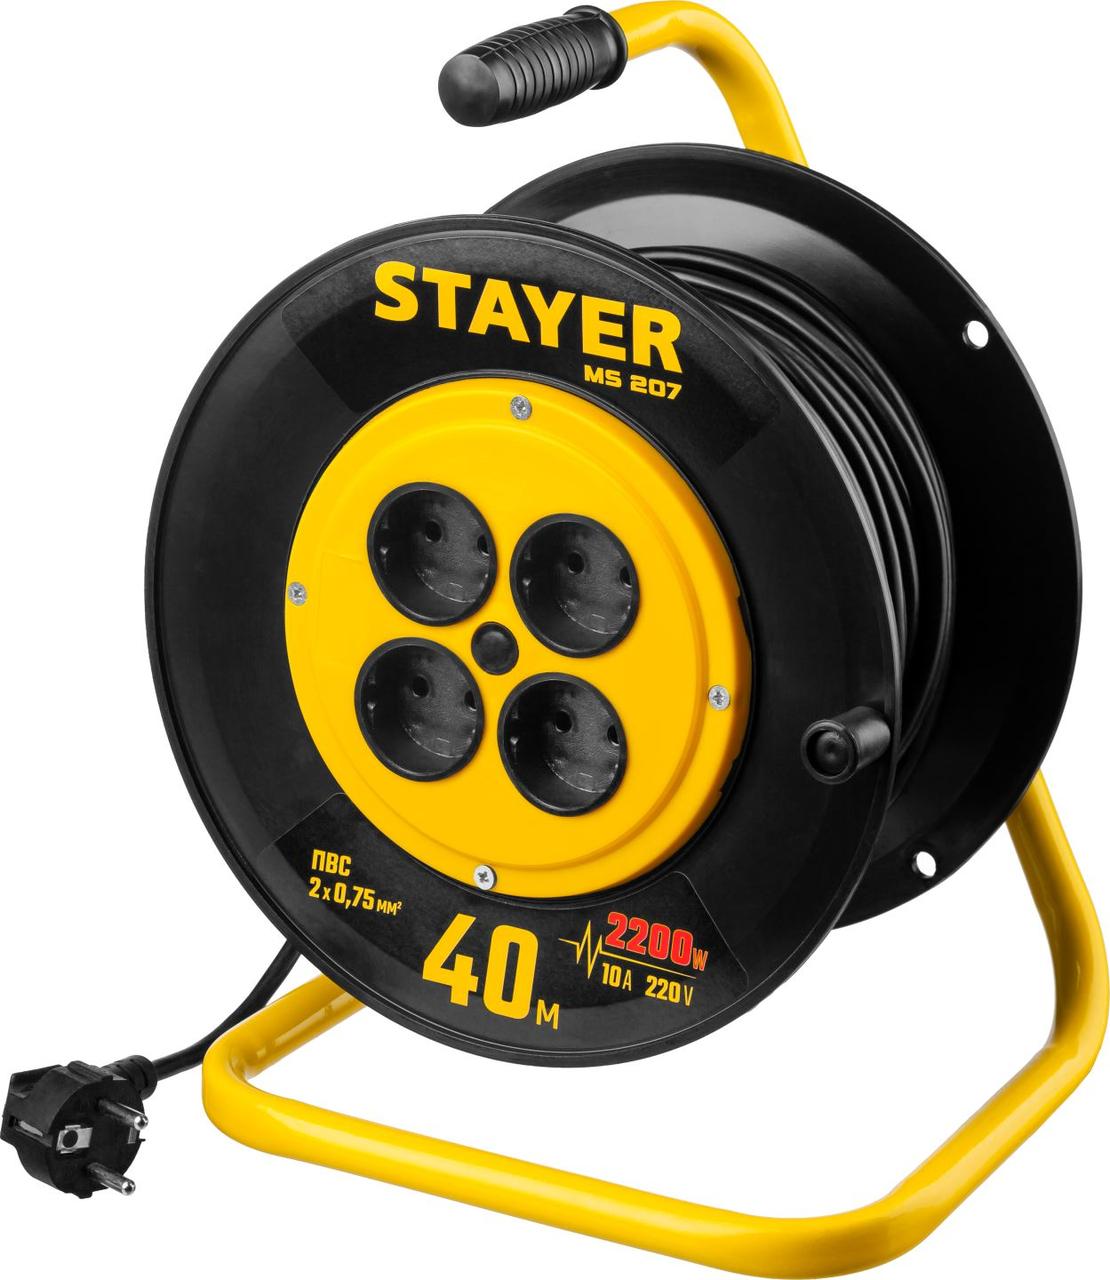 Удлинитель на катушке Stayer, MS 207, 40 м, 2200 Вт, ПВС 2x0,75 (55073-40)